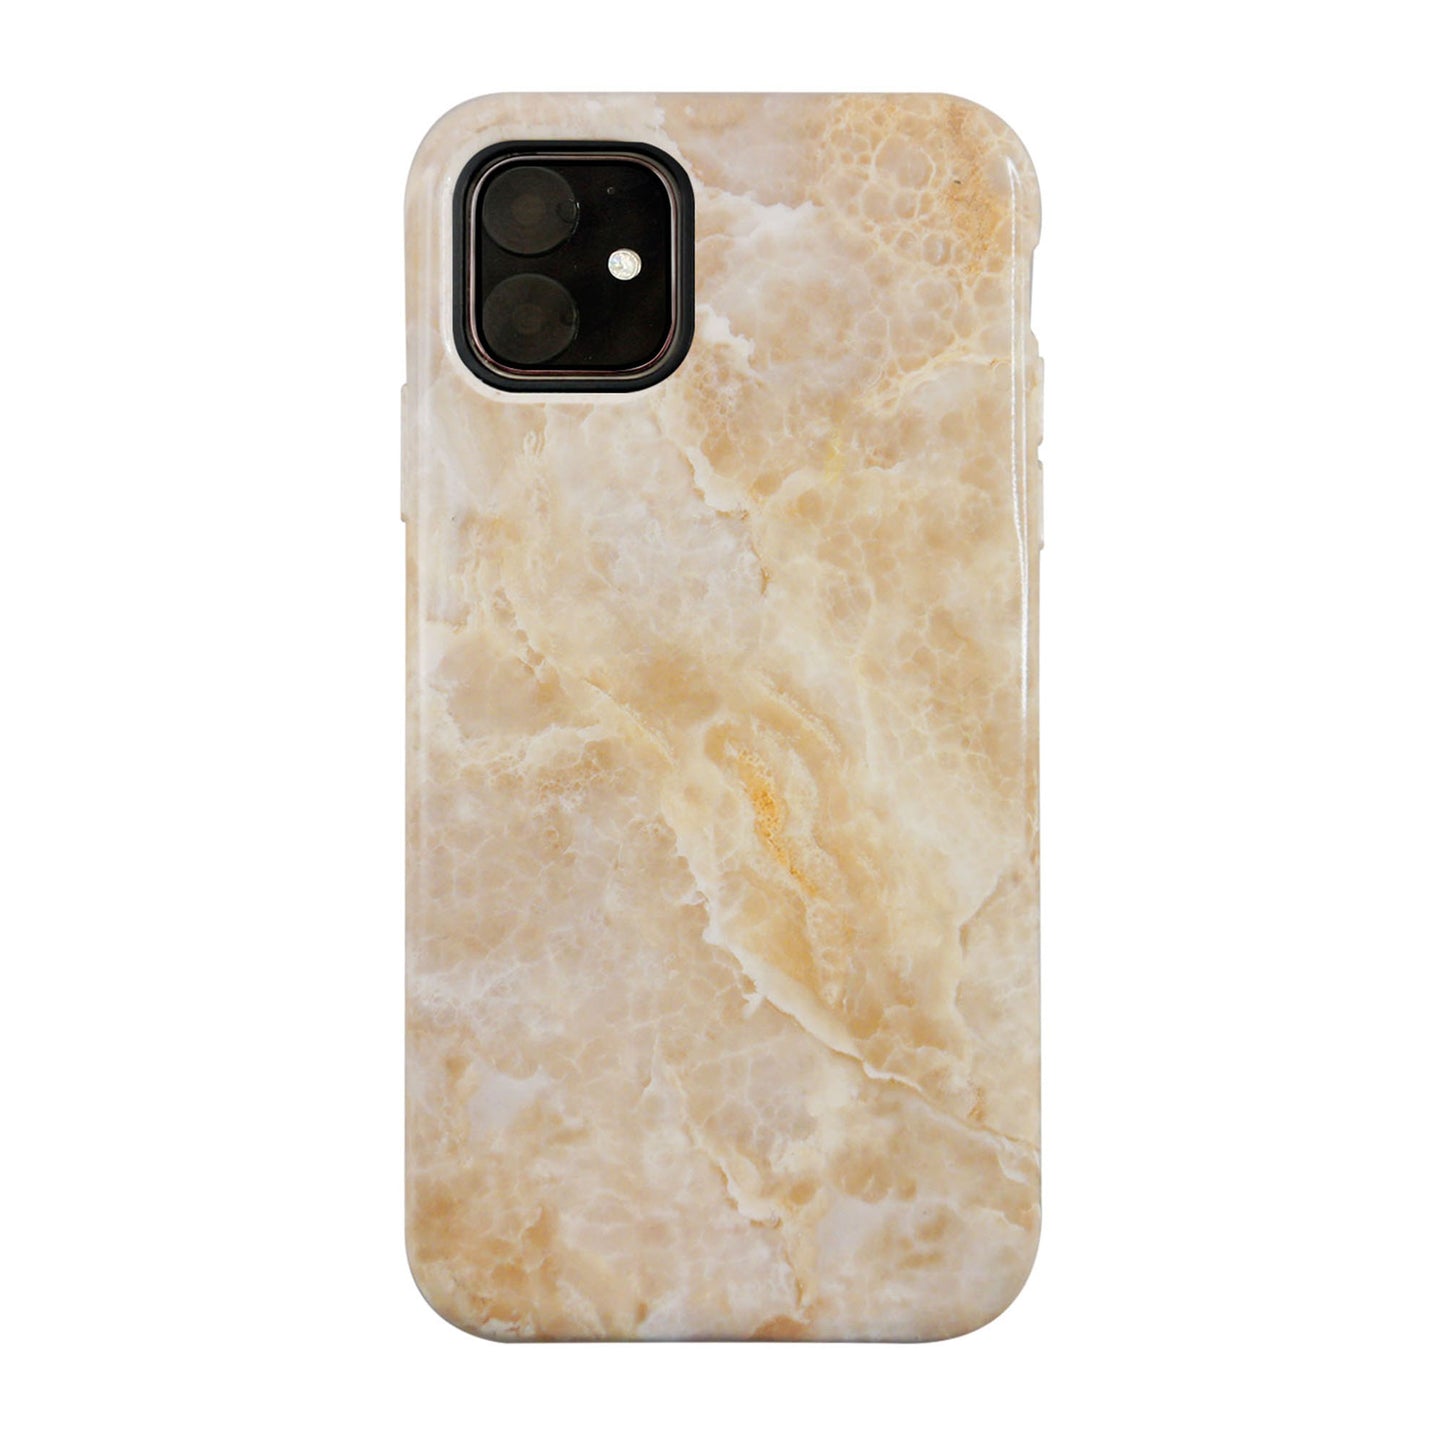 iPhone 11/XR Uunique Beige (Beige Marble) Nutrisiti Eco Printed Marble Back Case - 15-05117